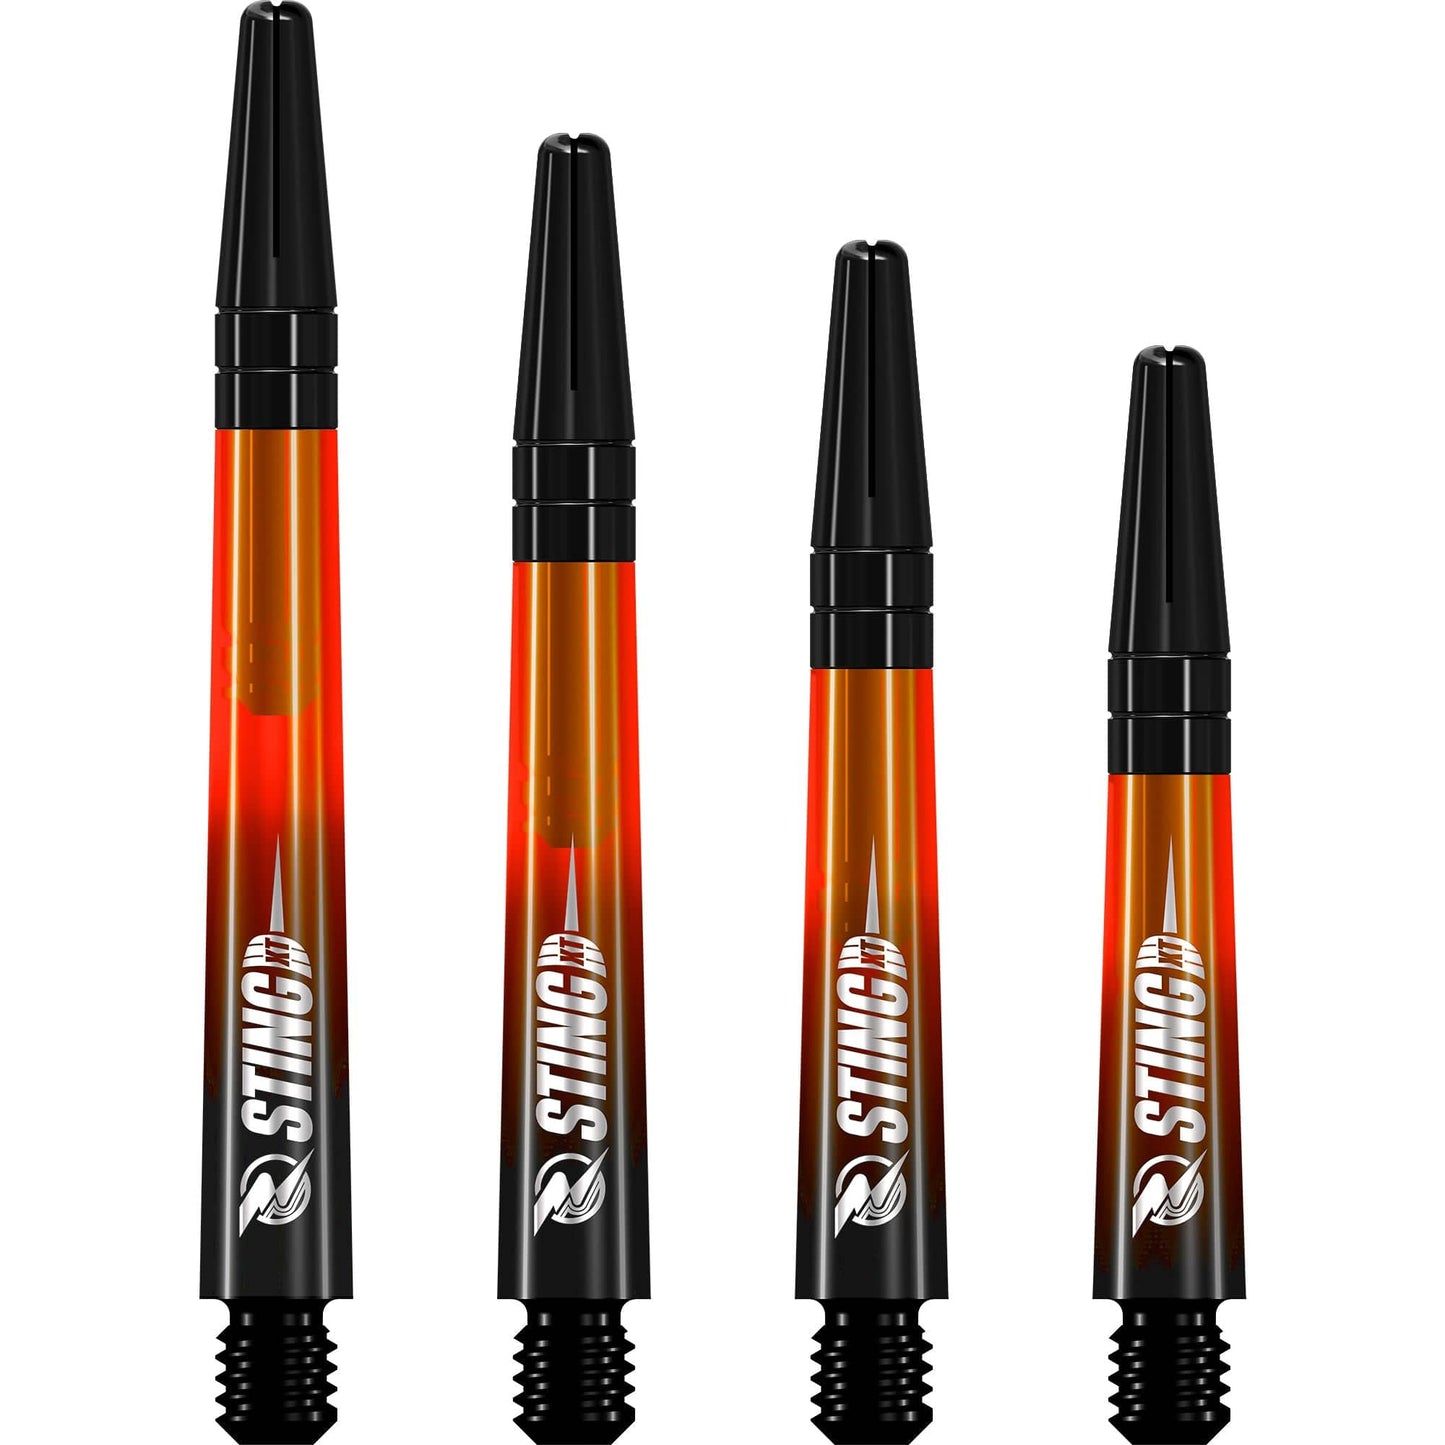 Ruthless Sting XT Dart Shafts - Polycarbonate - Gradient Black & Orange - Black Top